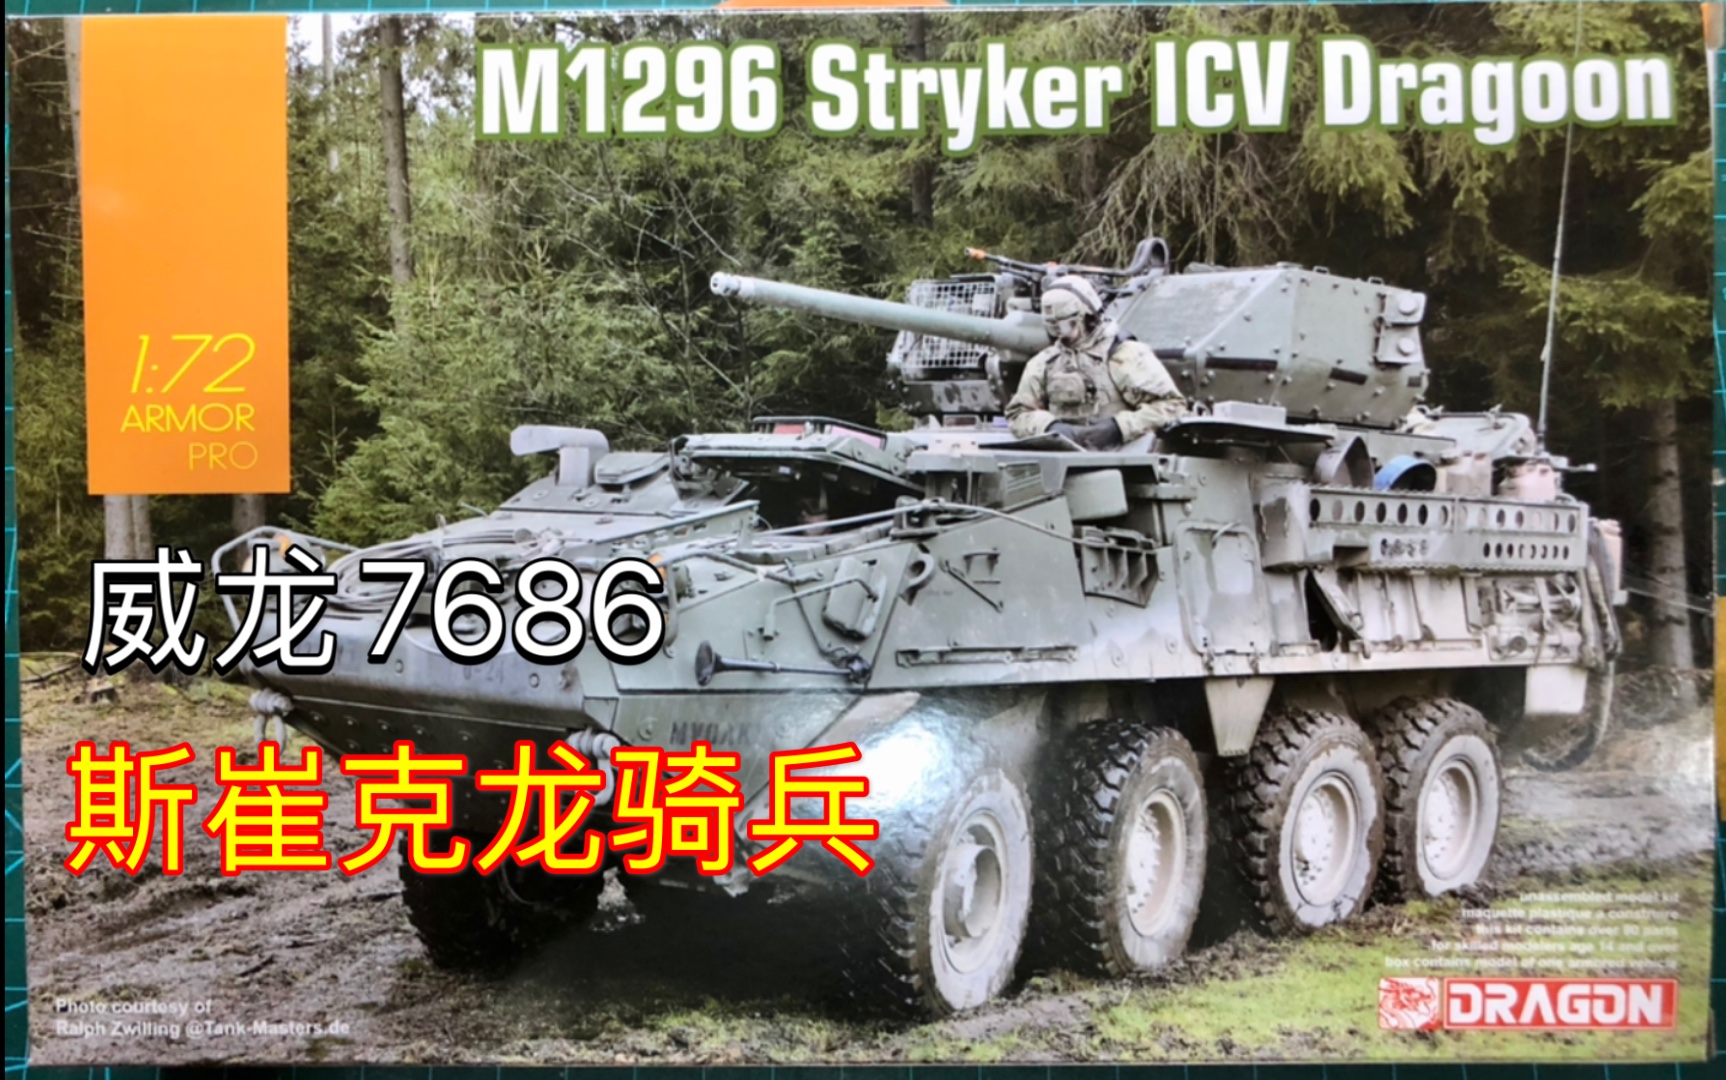 开盒】威龙Dragon 7686 1/72 M1296 Stryker ICV Dragoon 斯崔克龙骑兵_ 